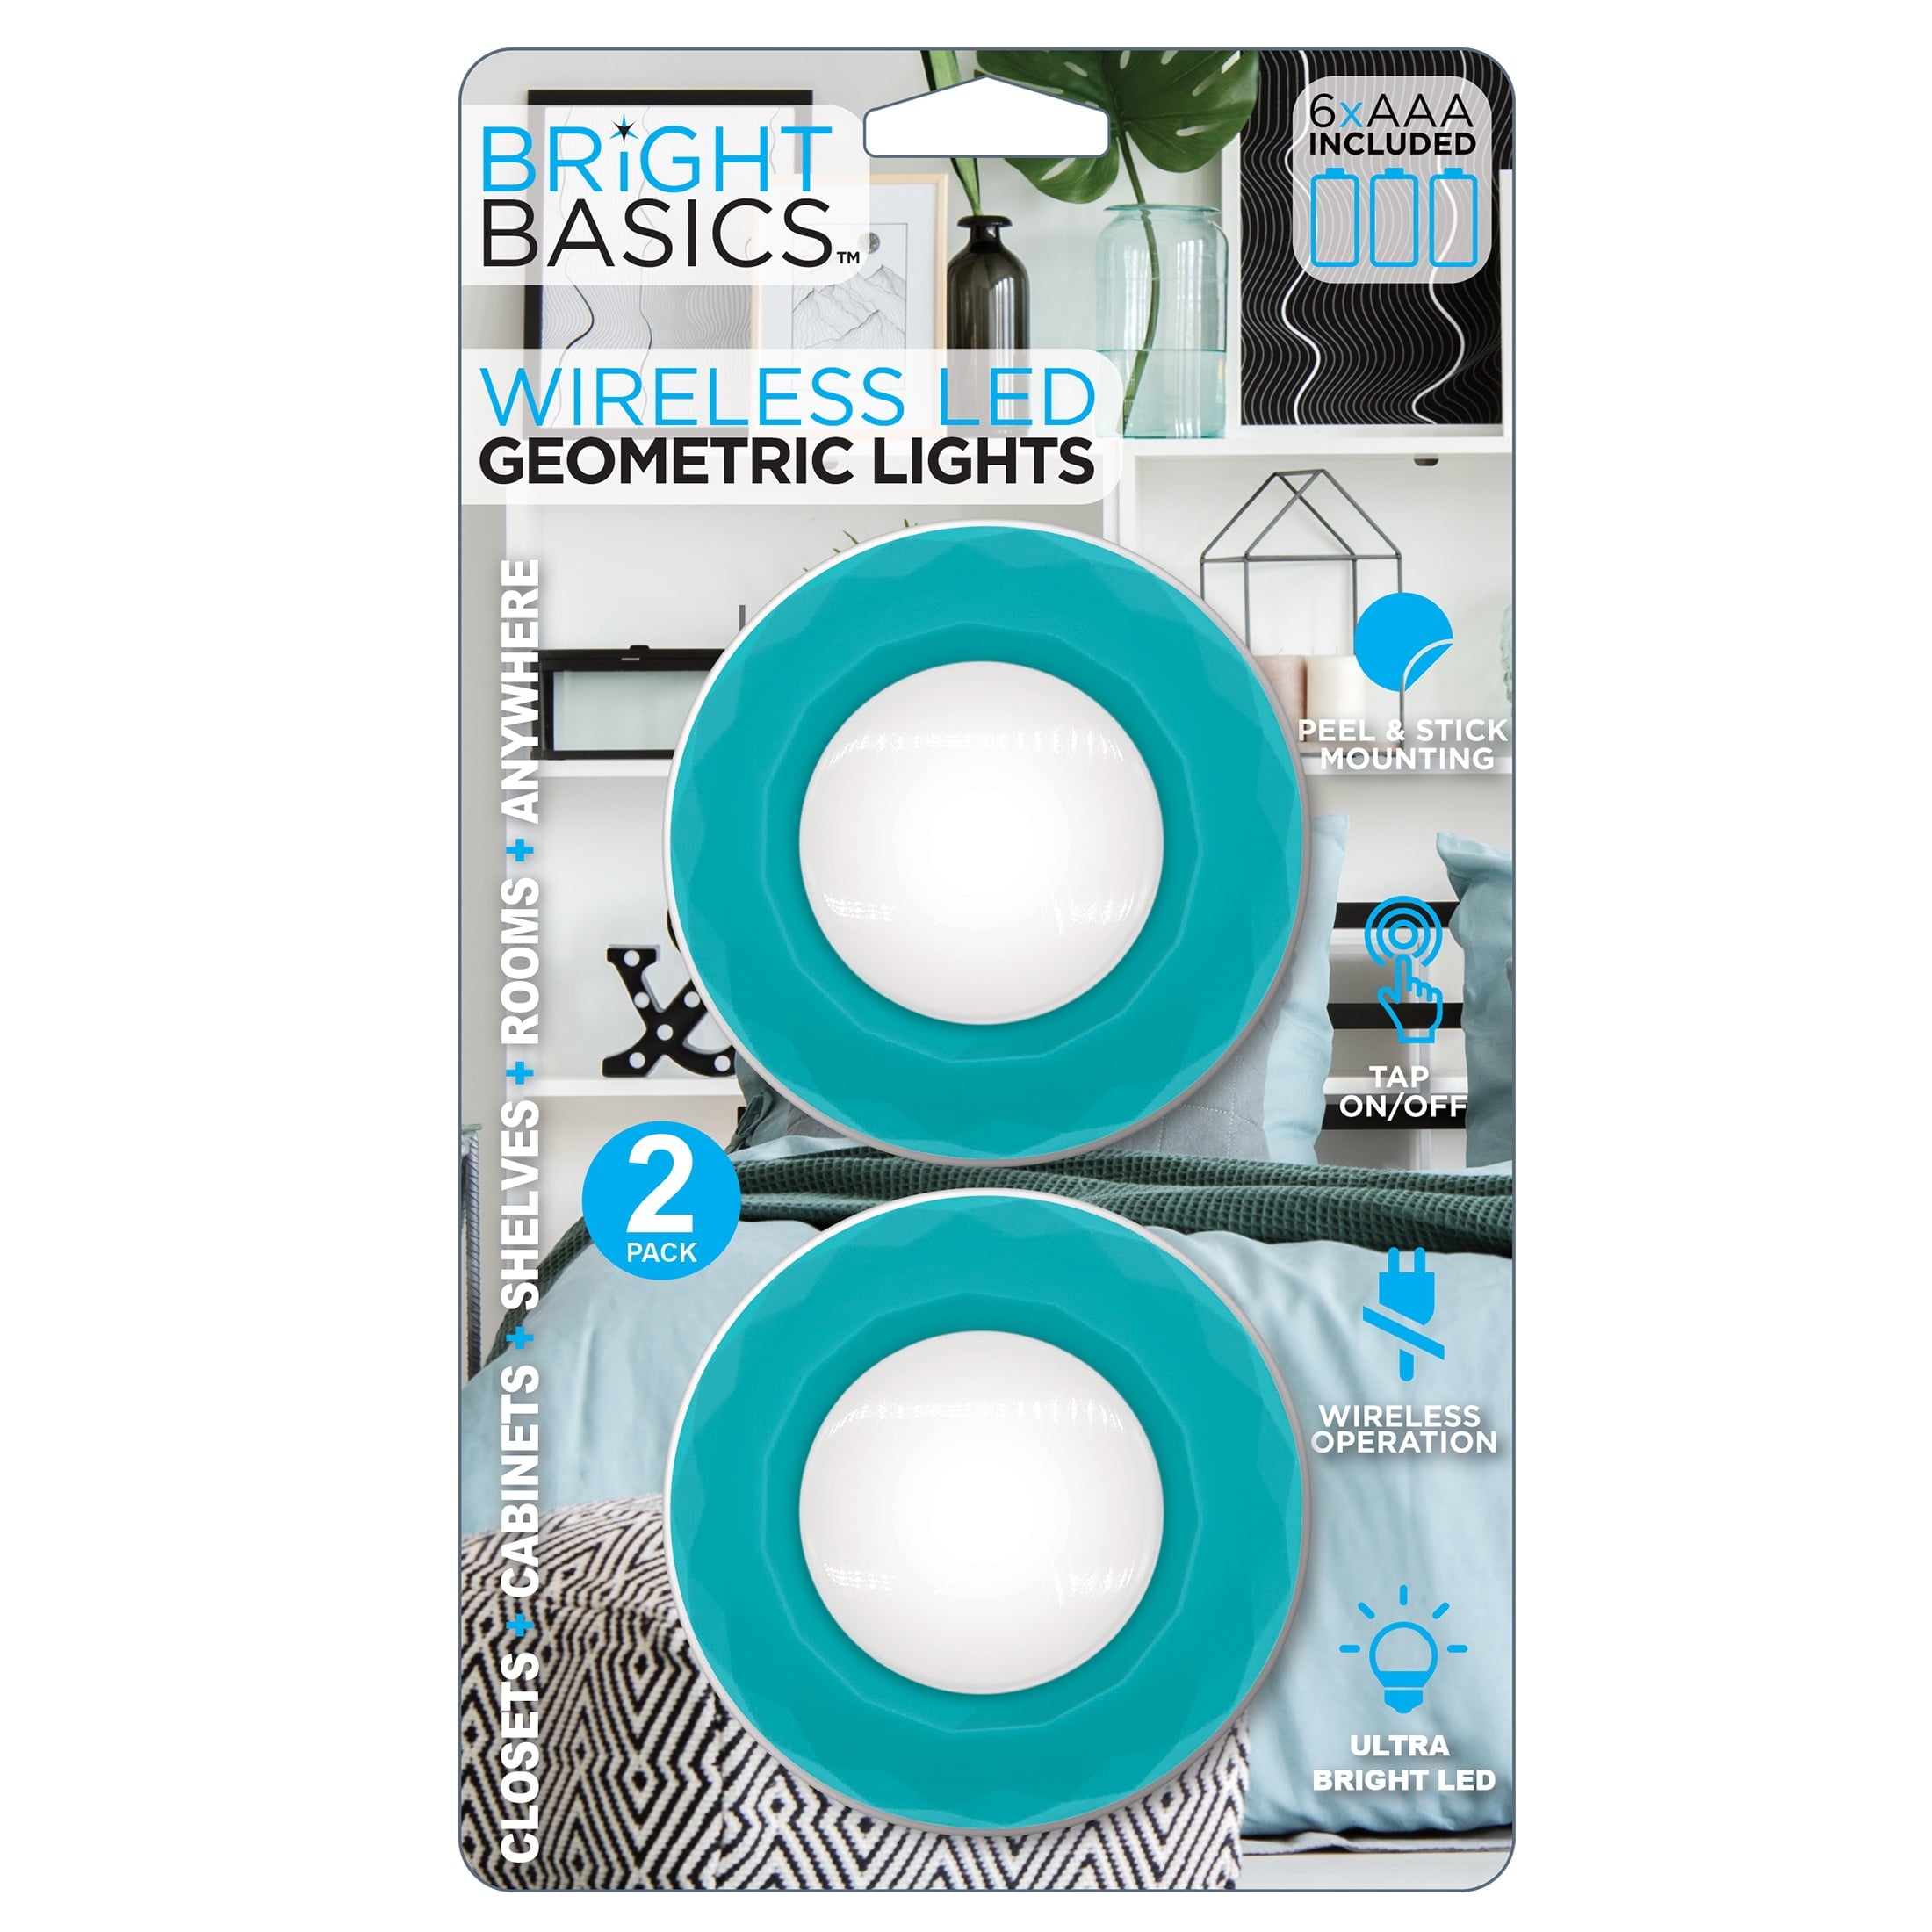 Bright Basics Wireless LED Geometric Lights, 2 Pack